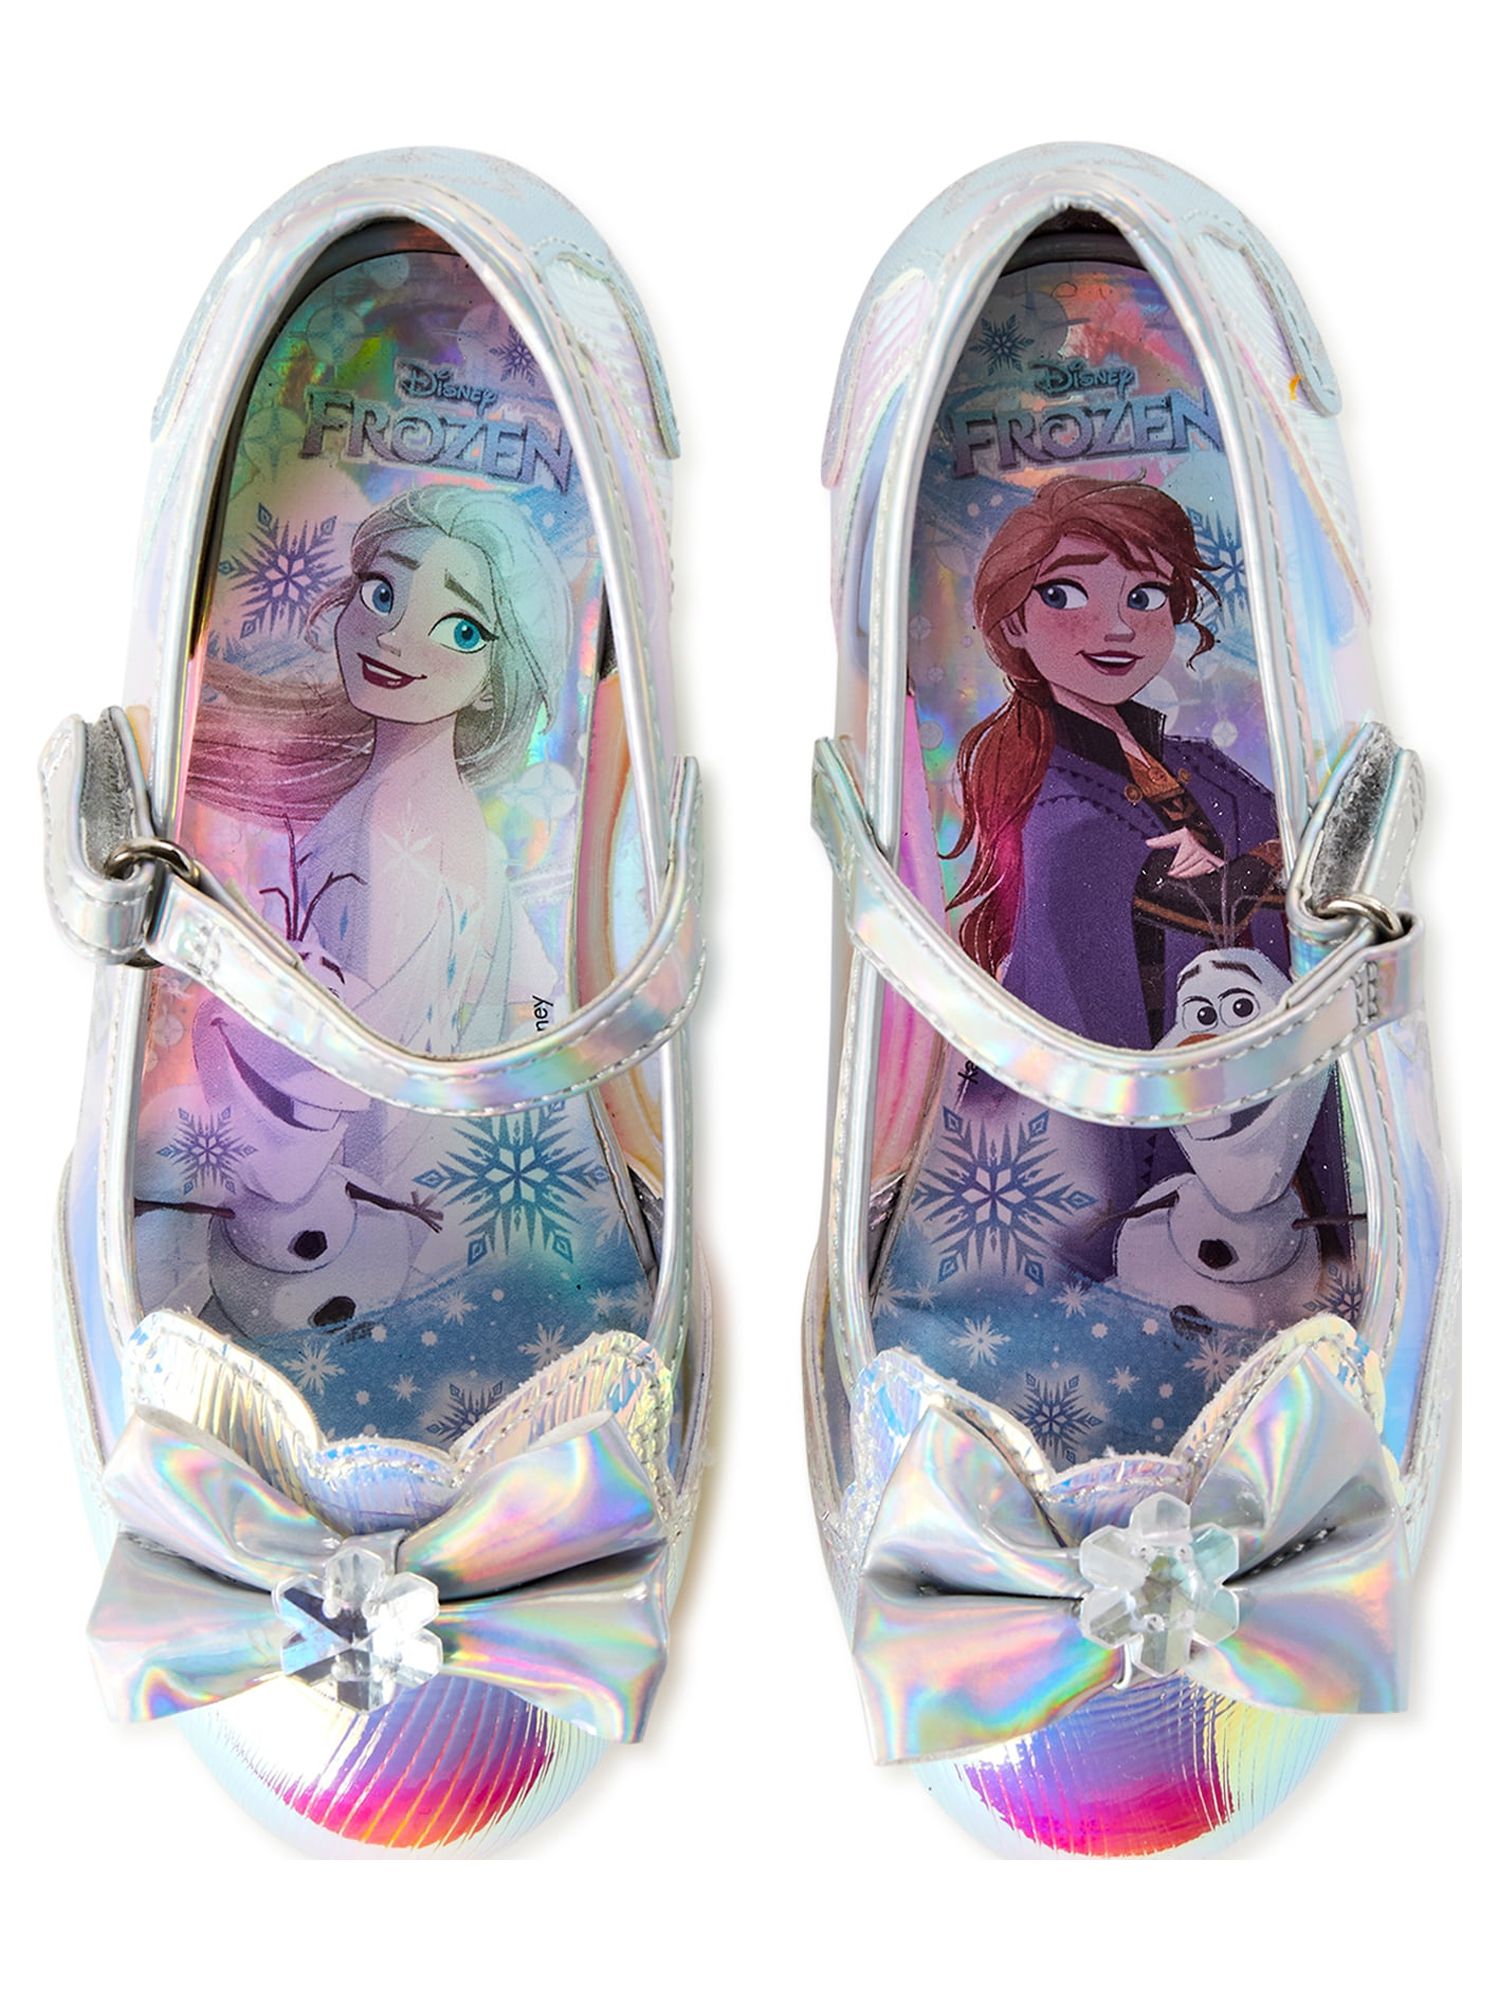 Disney Frozen Toddler Girl Low Heel Dress Up Shoes - image 2 of 3